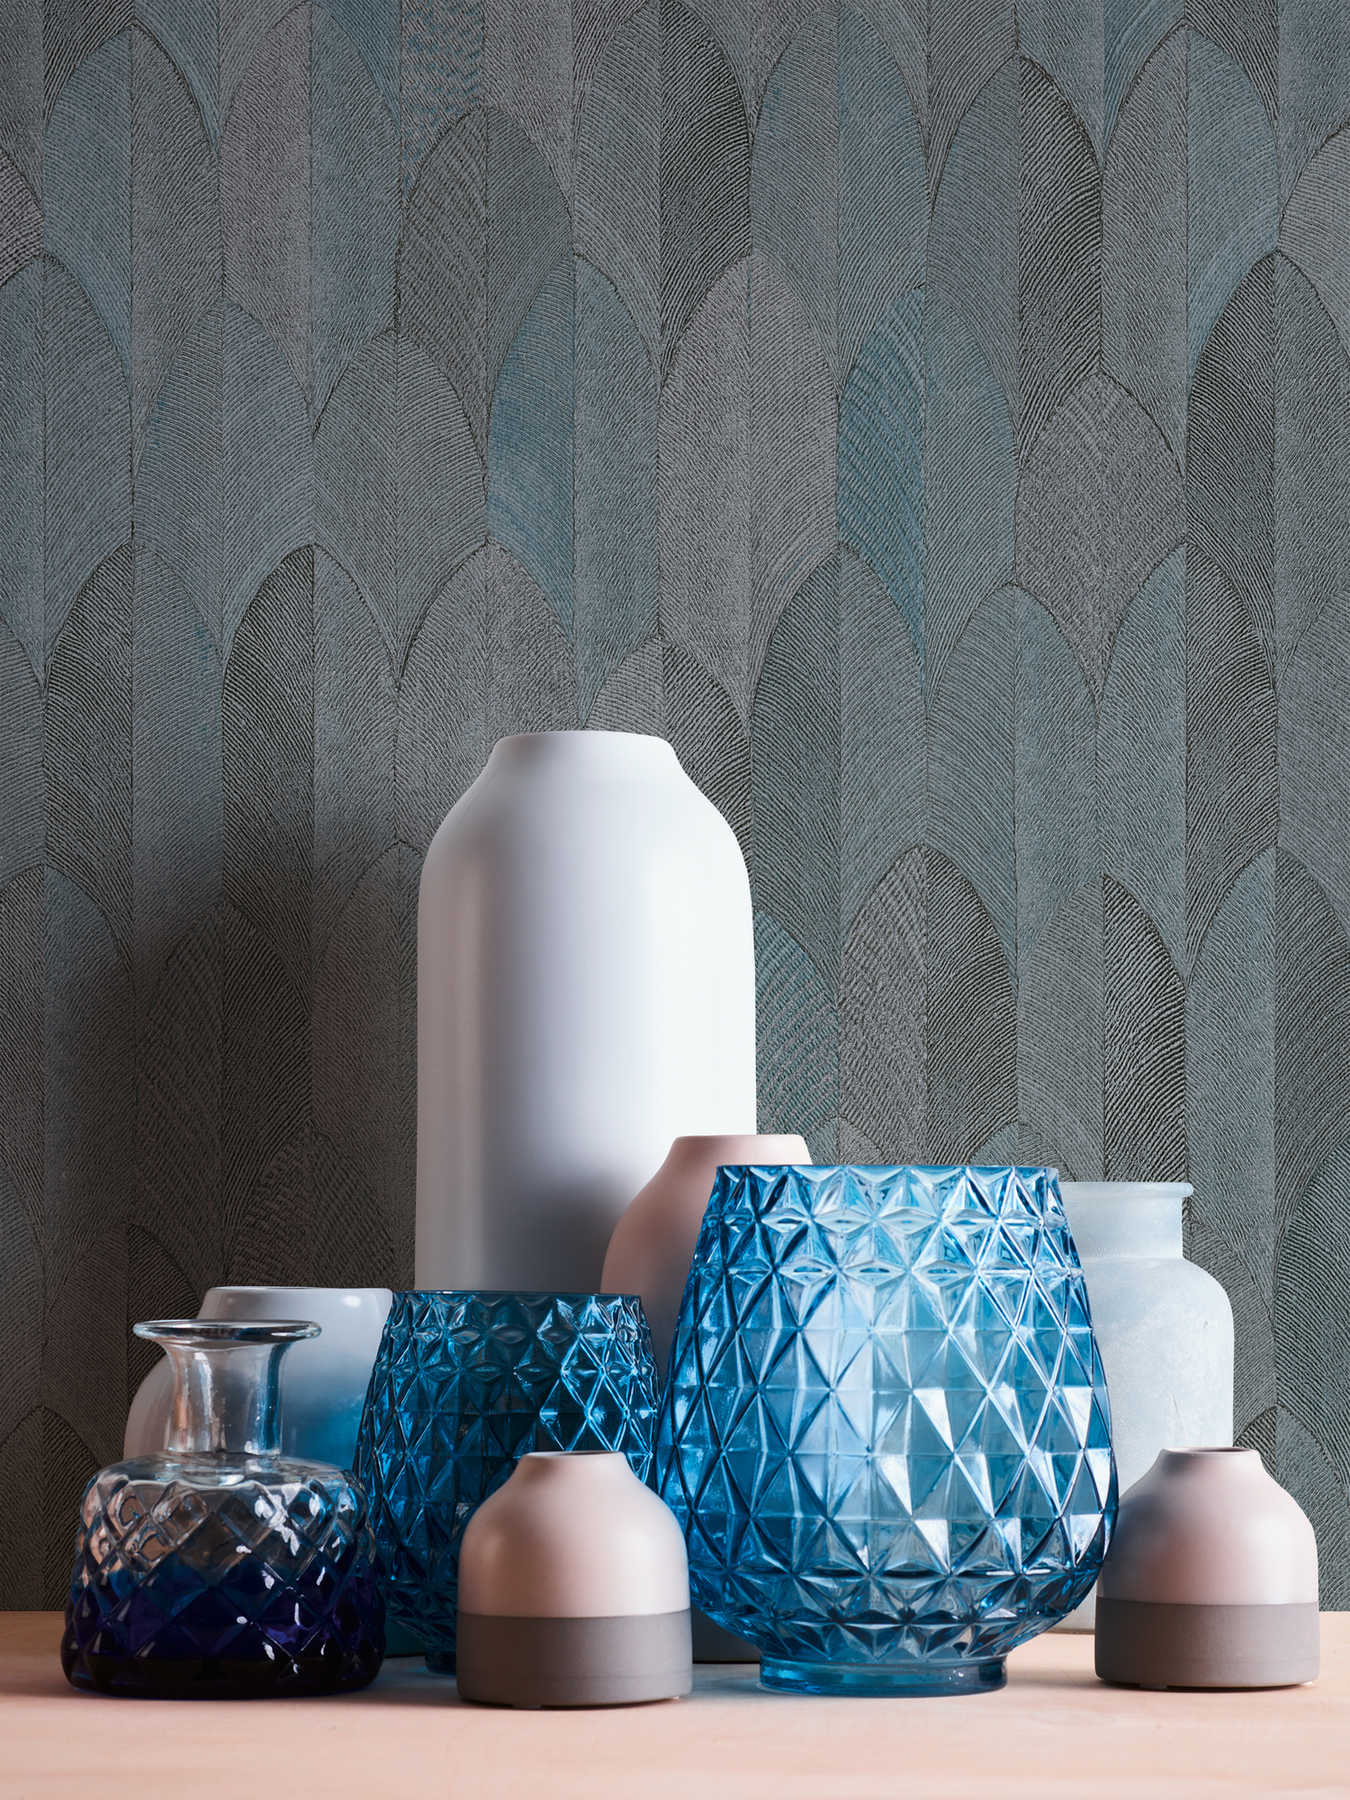             Symetric design wallpaper with metallic effect - grey, blue, black
        